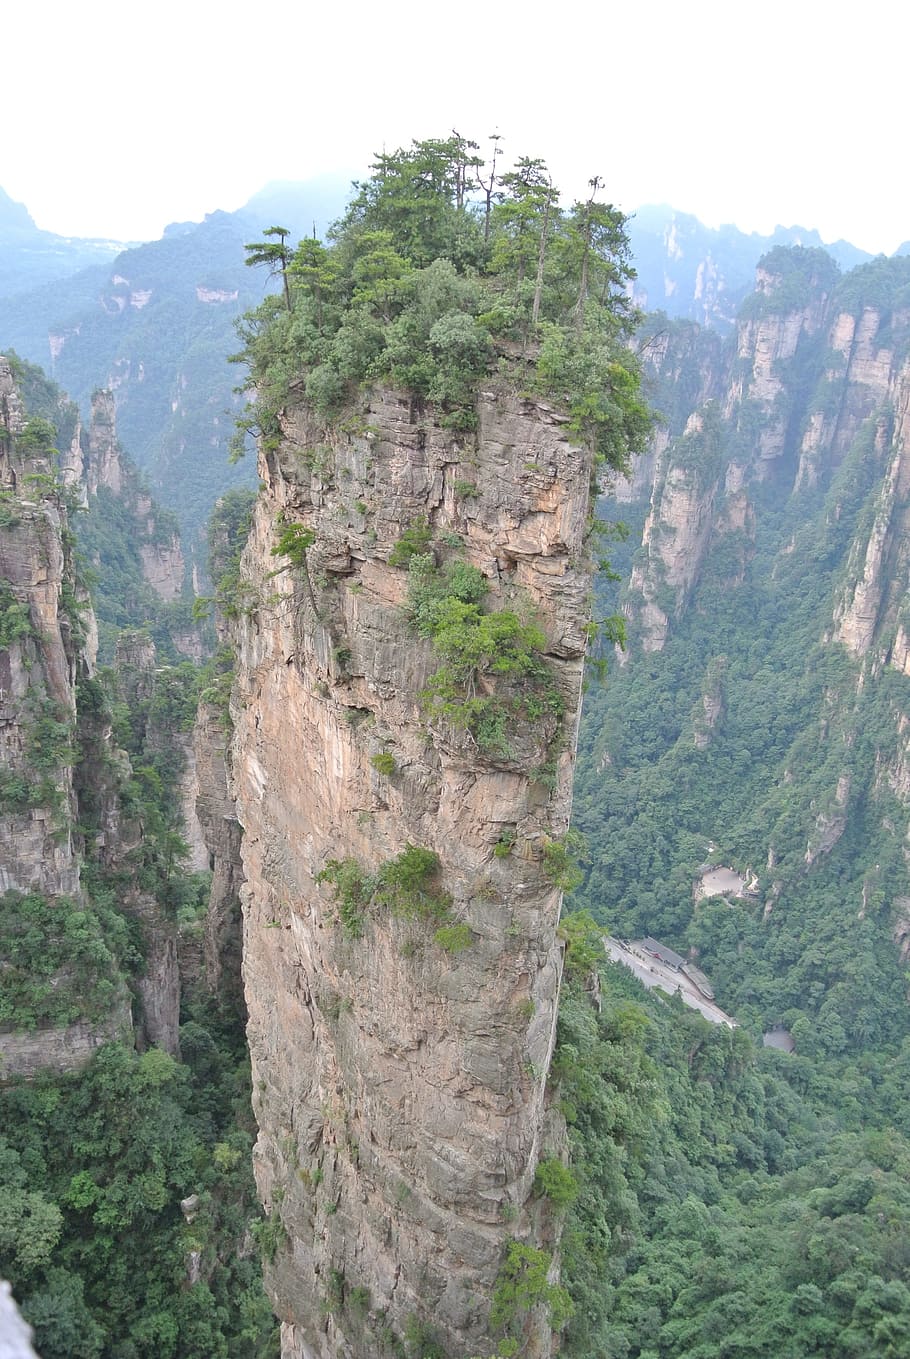 zhangjiajie, mountain, the scenery, plant, scenics - nature, tree, tranquil scene, tranquility, nature, beauty in nature